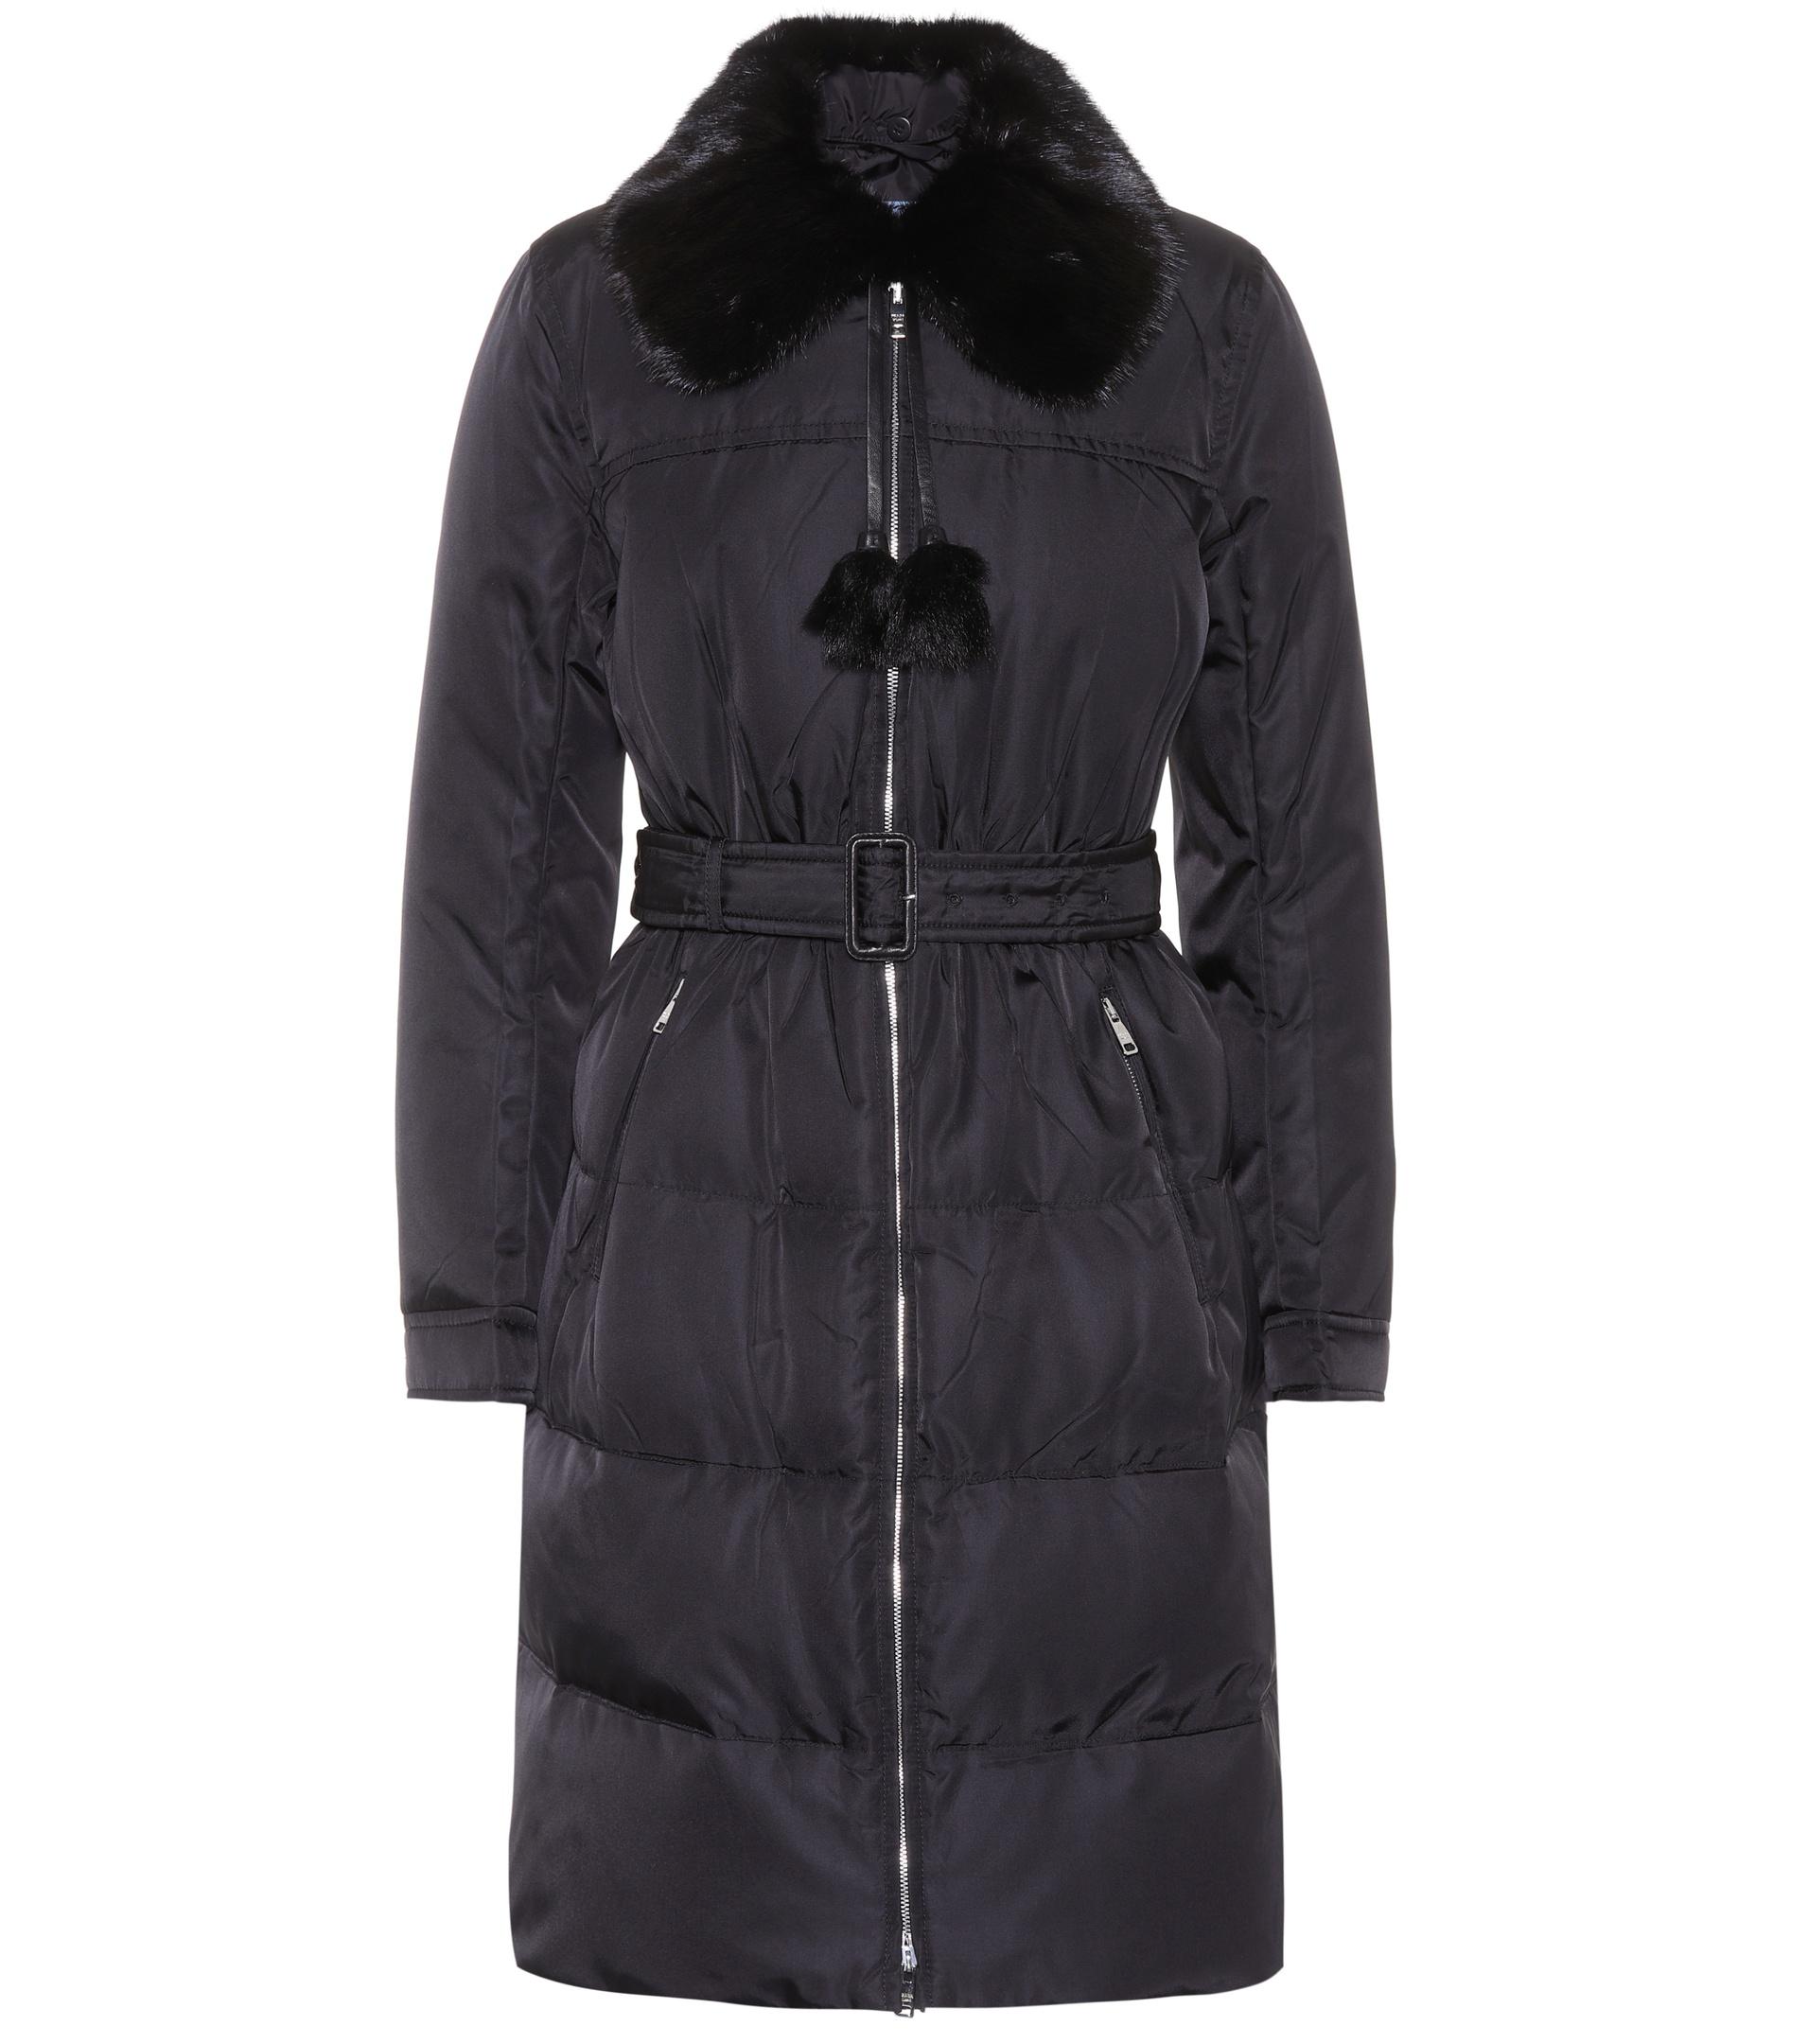 Prada Fur-trimmed Coat in Black - Lyst